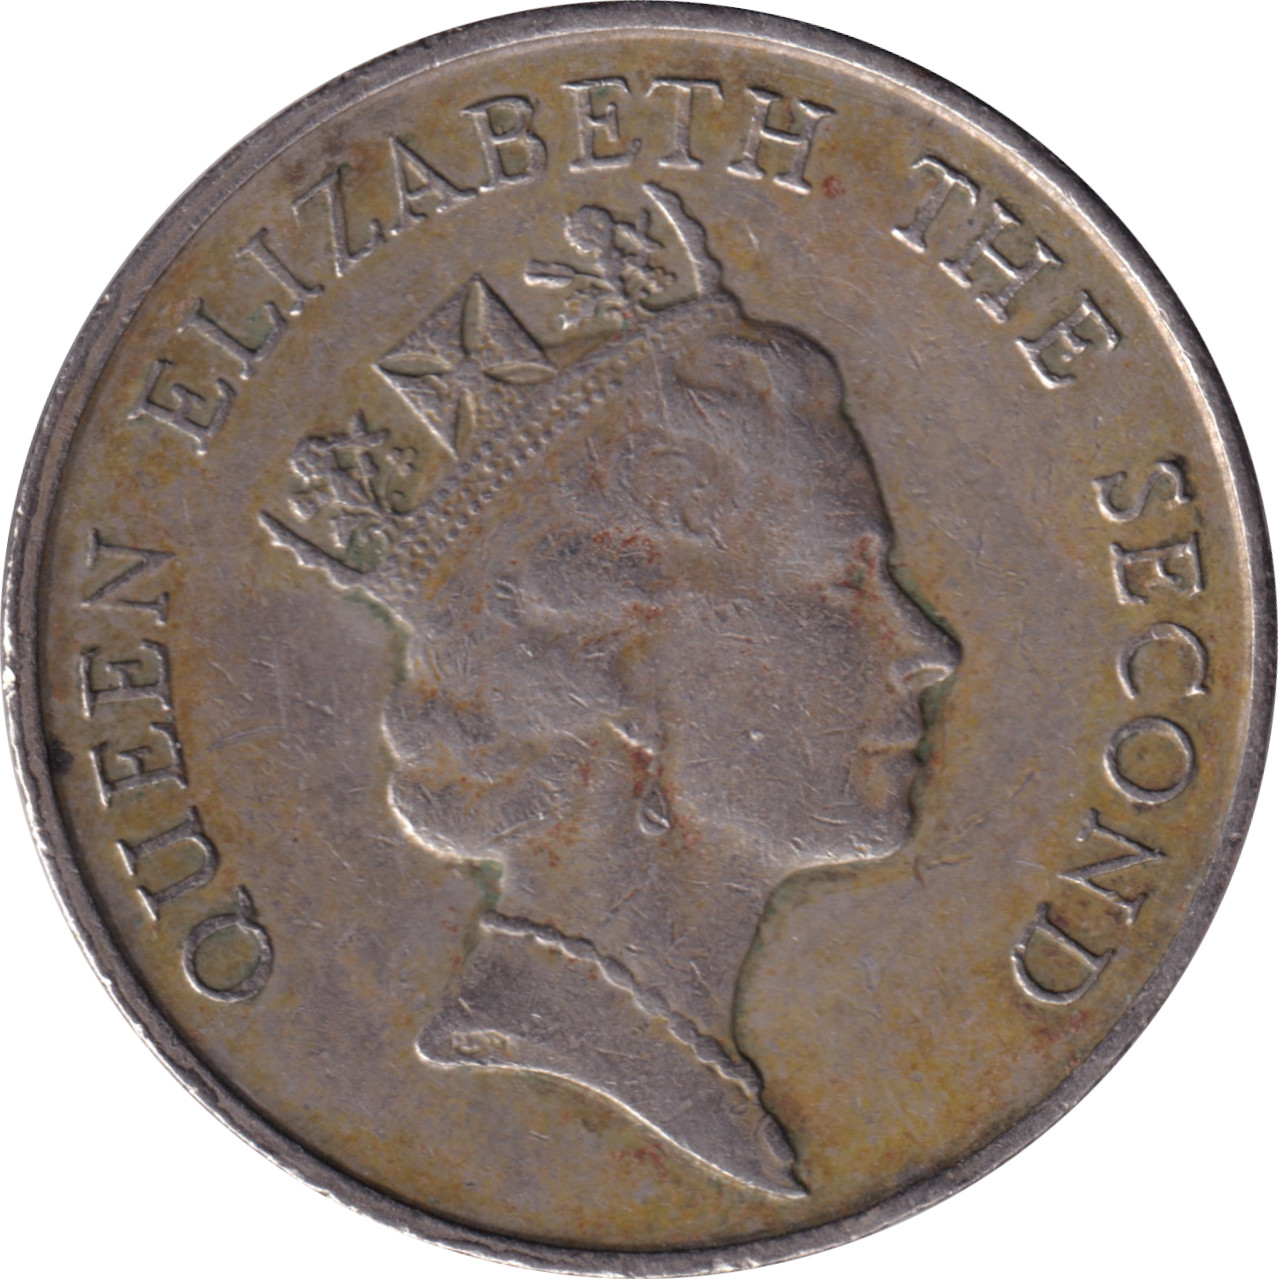 5 dollars - Elizabeth II - Tête mature